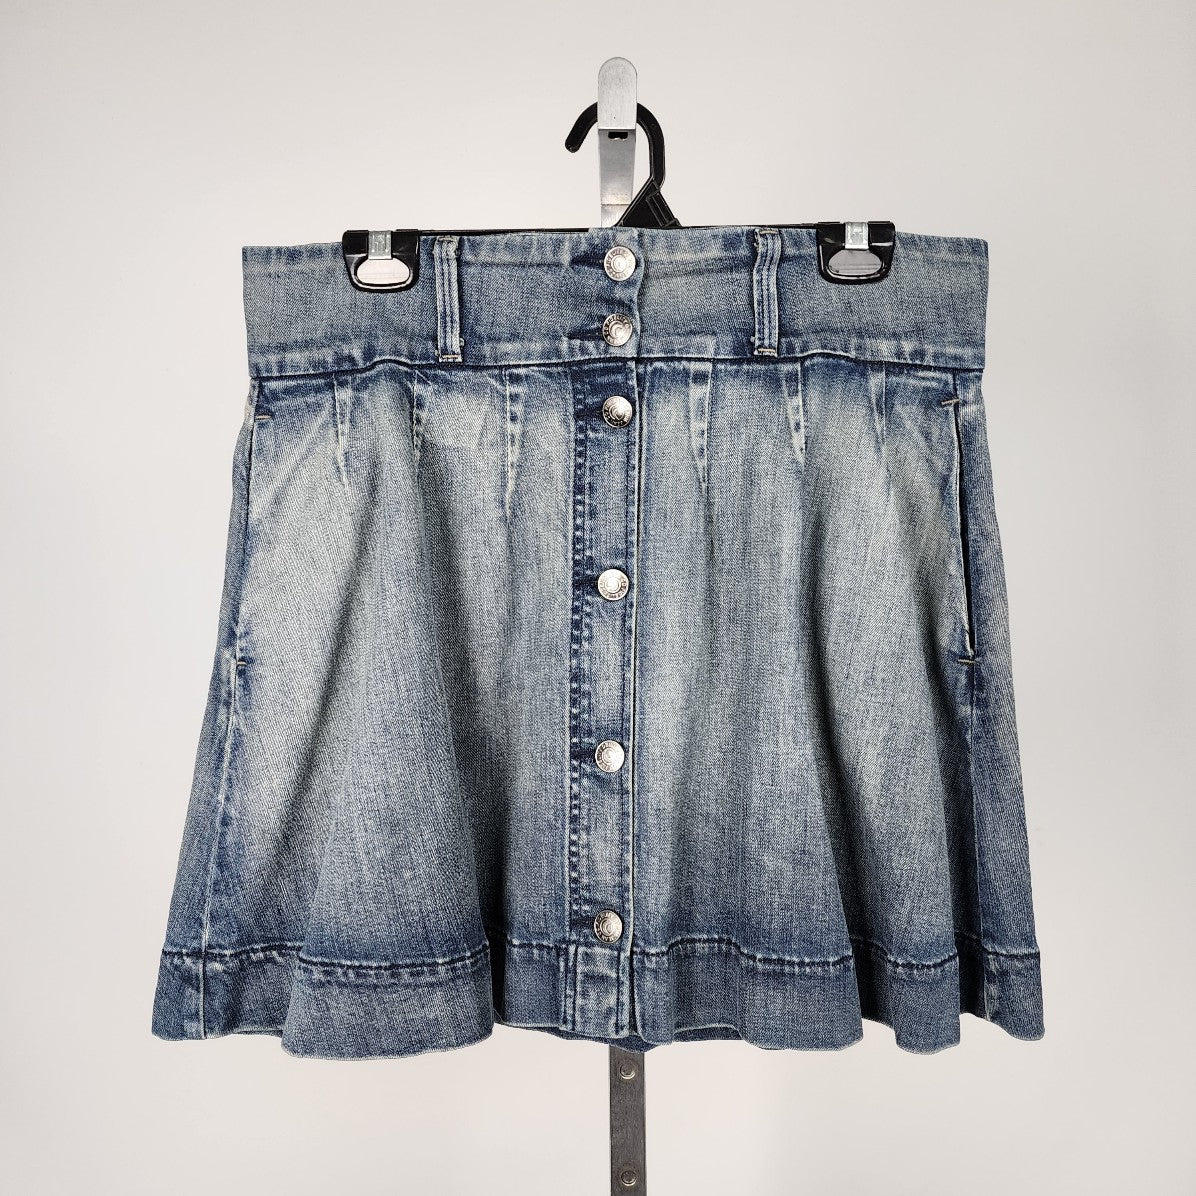 Fidelity A-Line Jean Skirt Size L